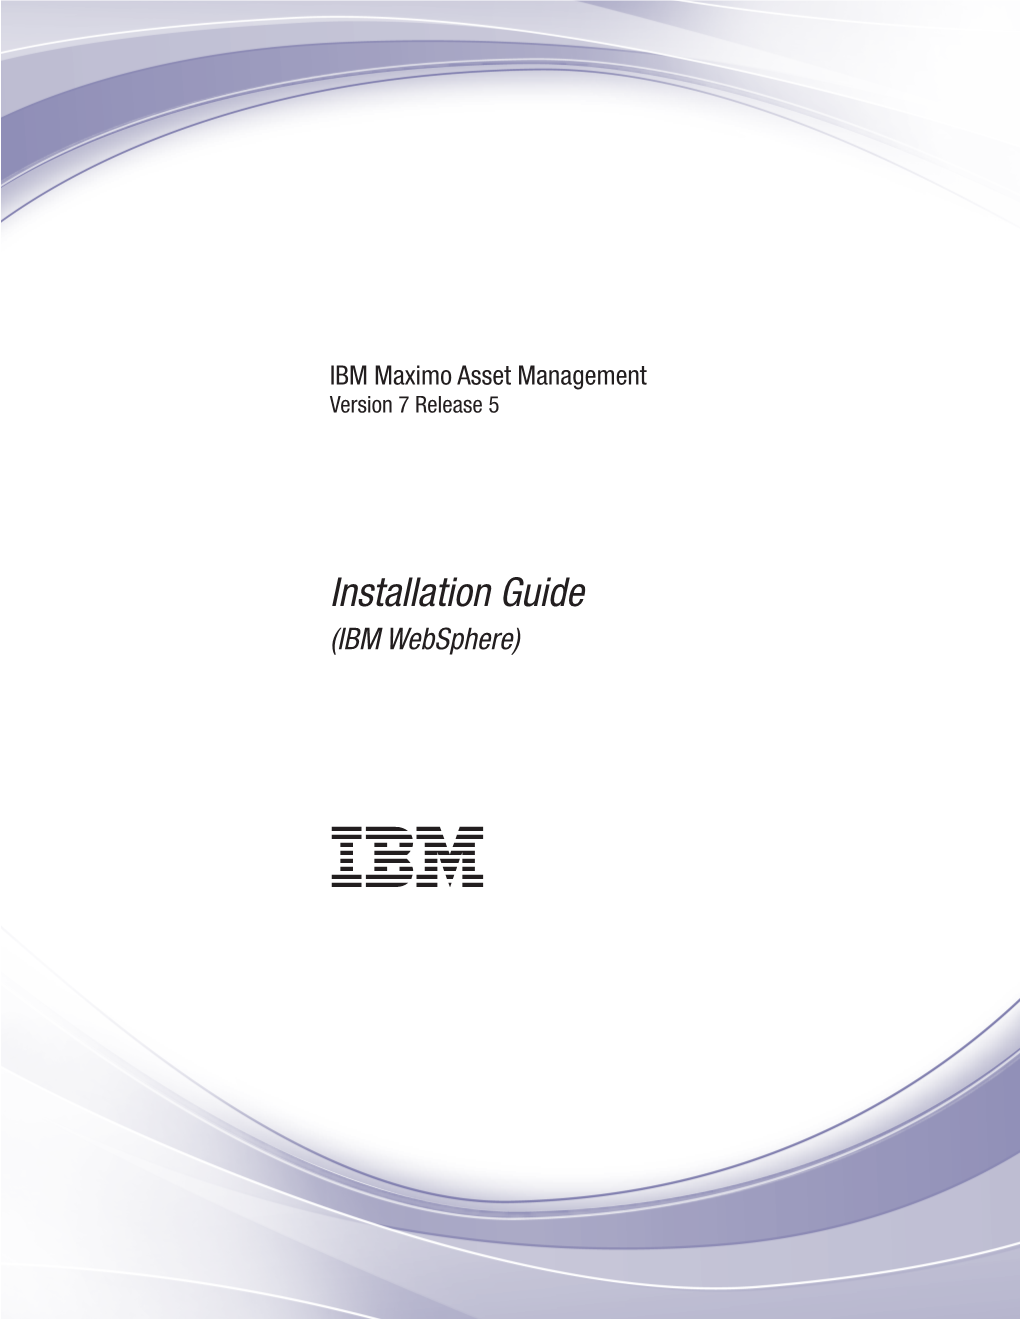 IBM Maximo Asset Management: Installation Guide (IBM Websphere) Invalid DB2 Password Value